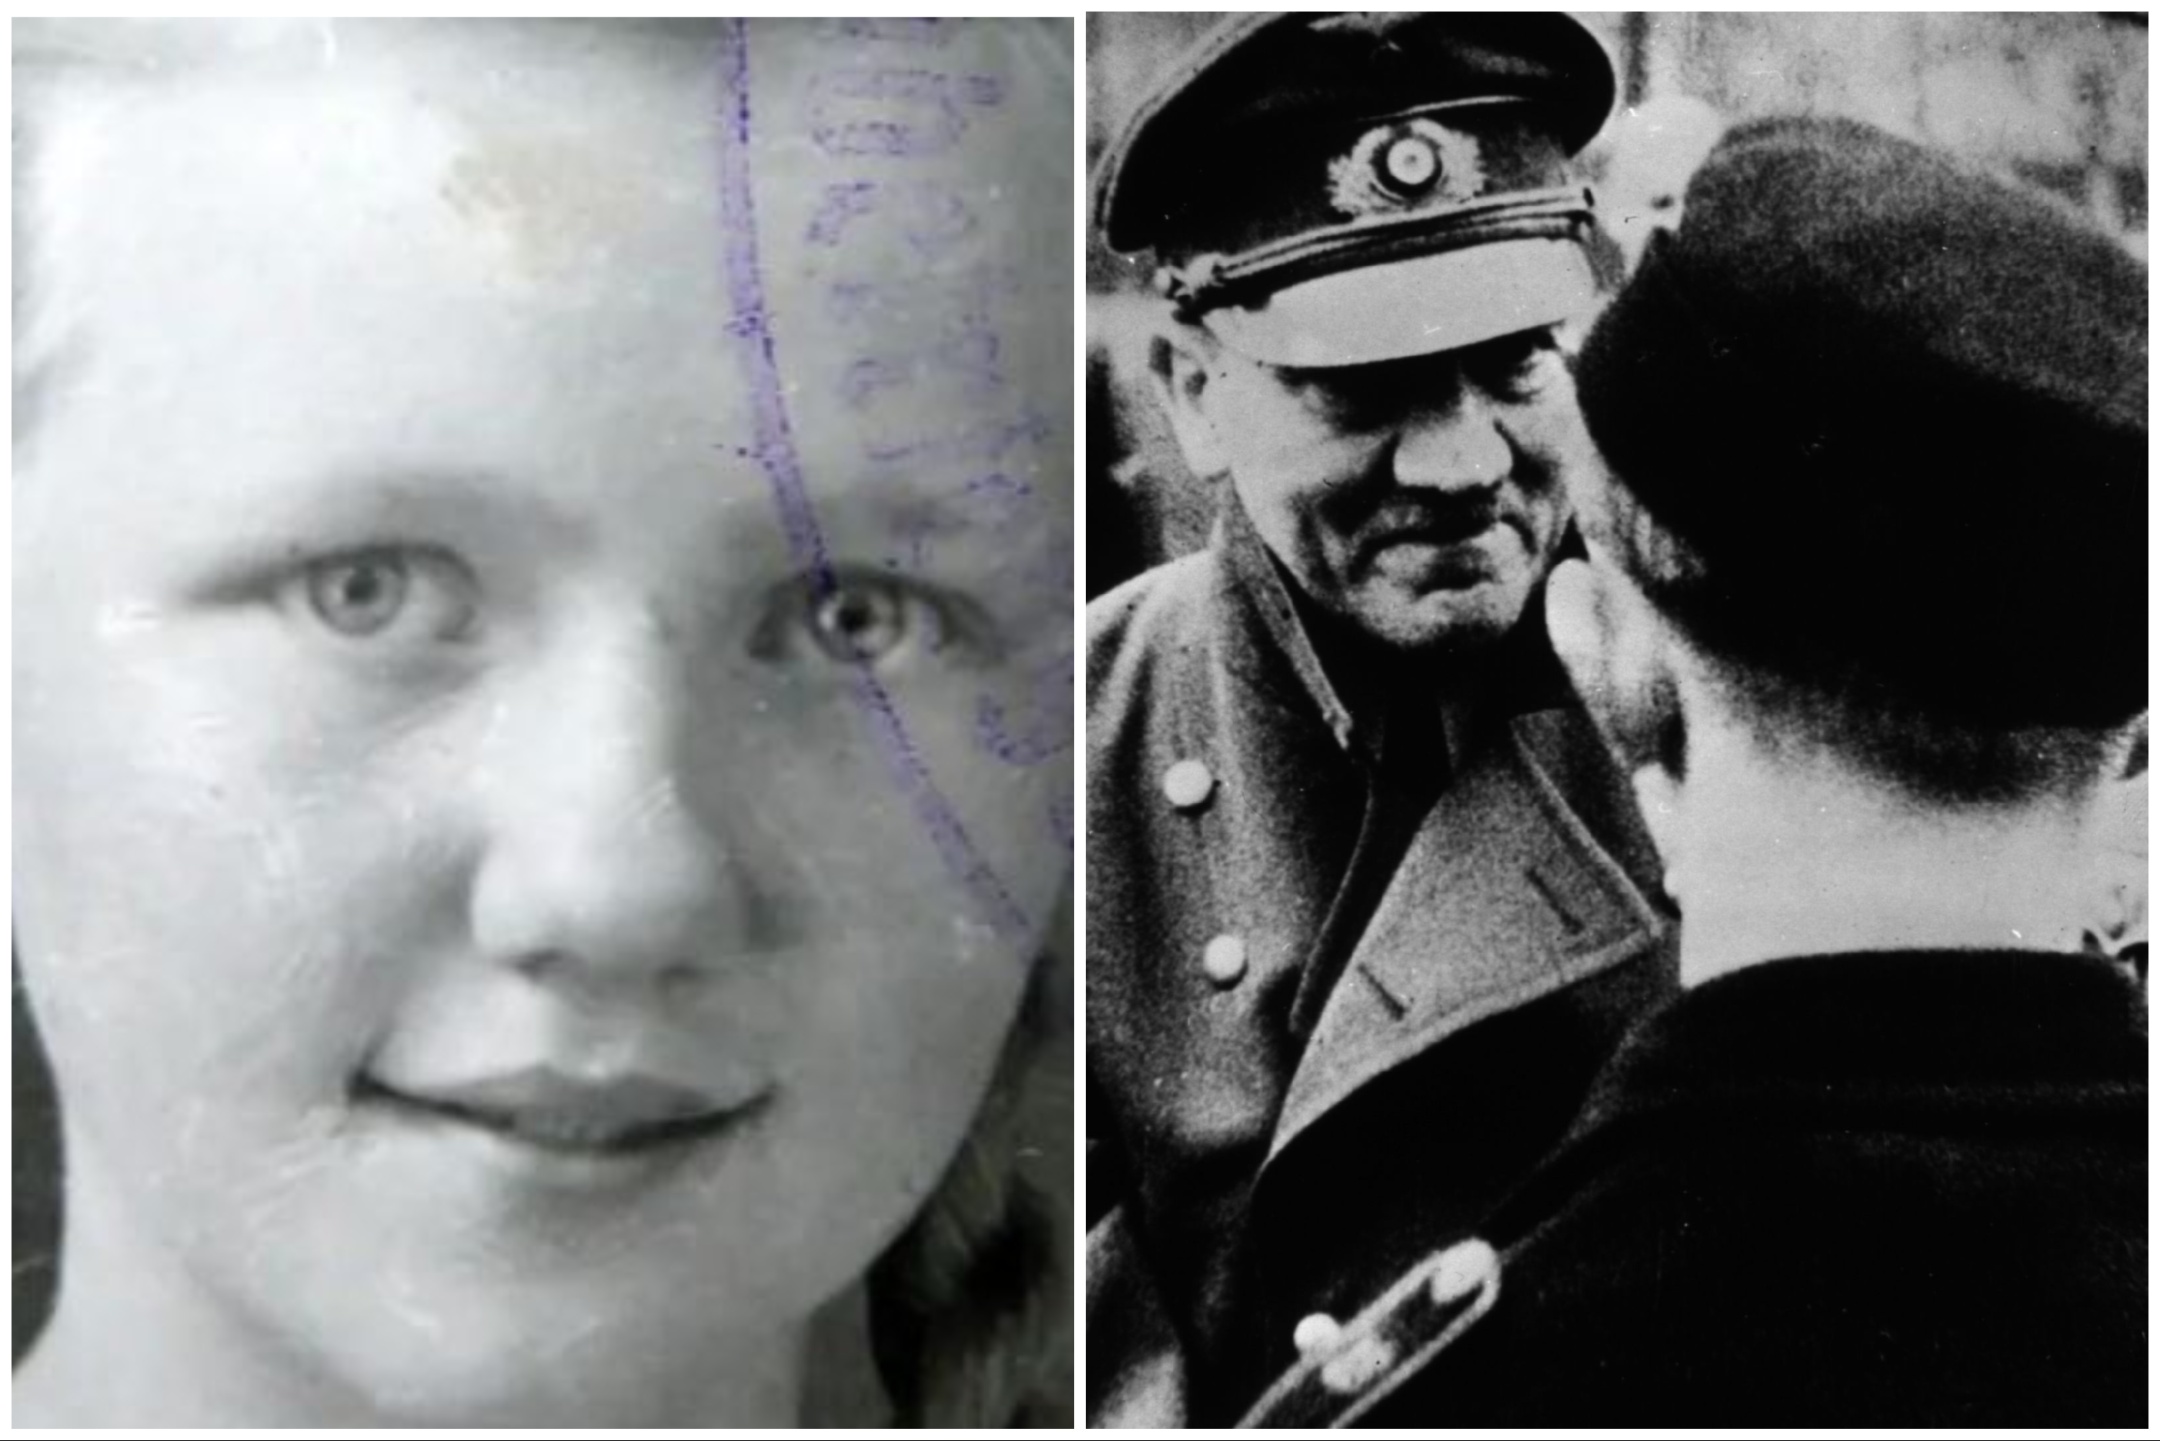 Last survivor of Hitler’s bunker Johanna Ruf dies aged 94